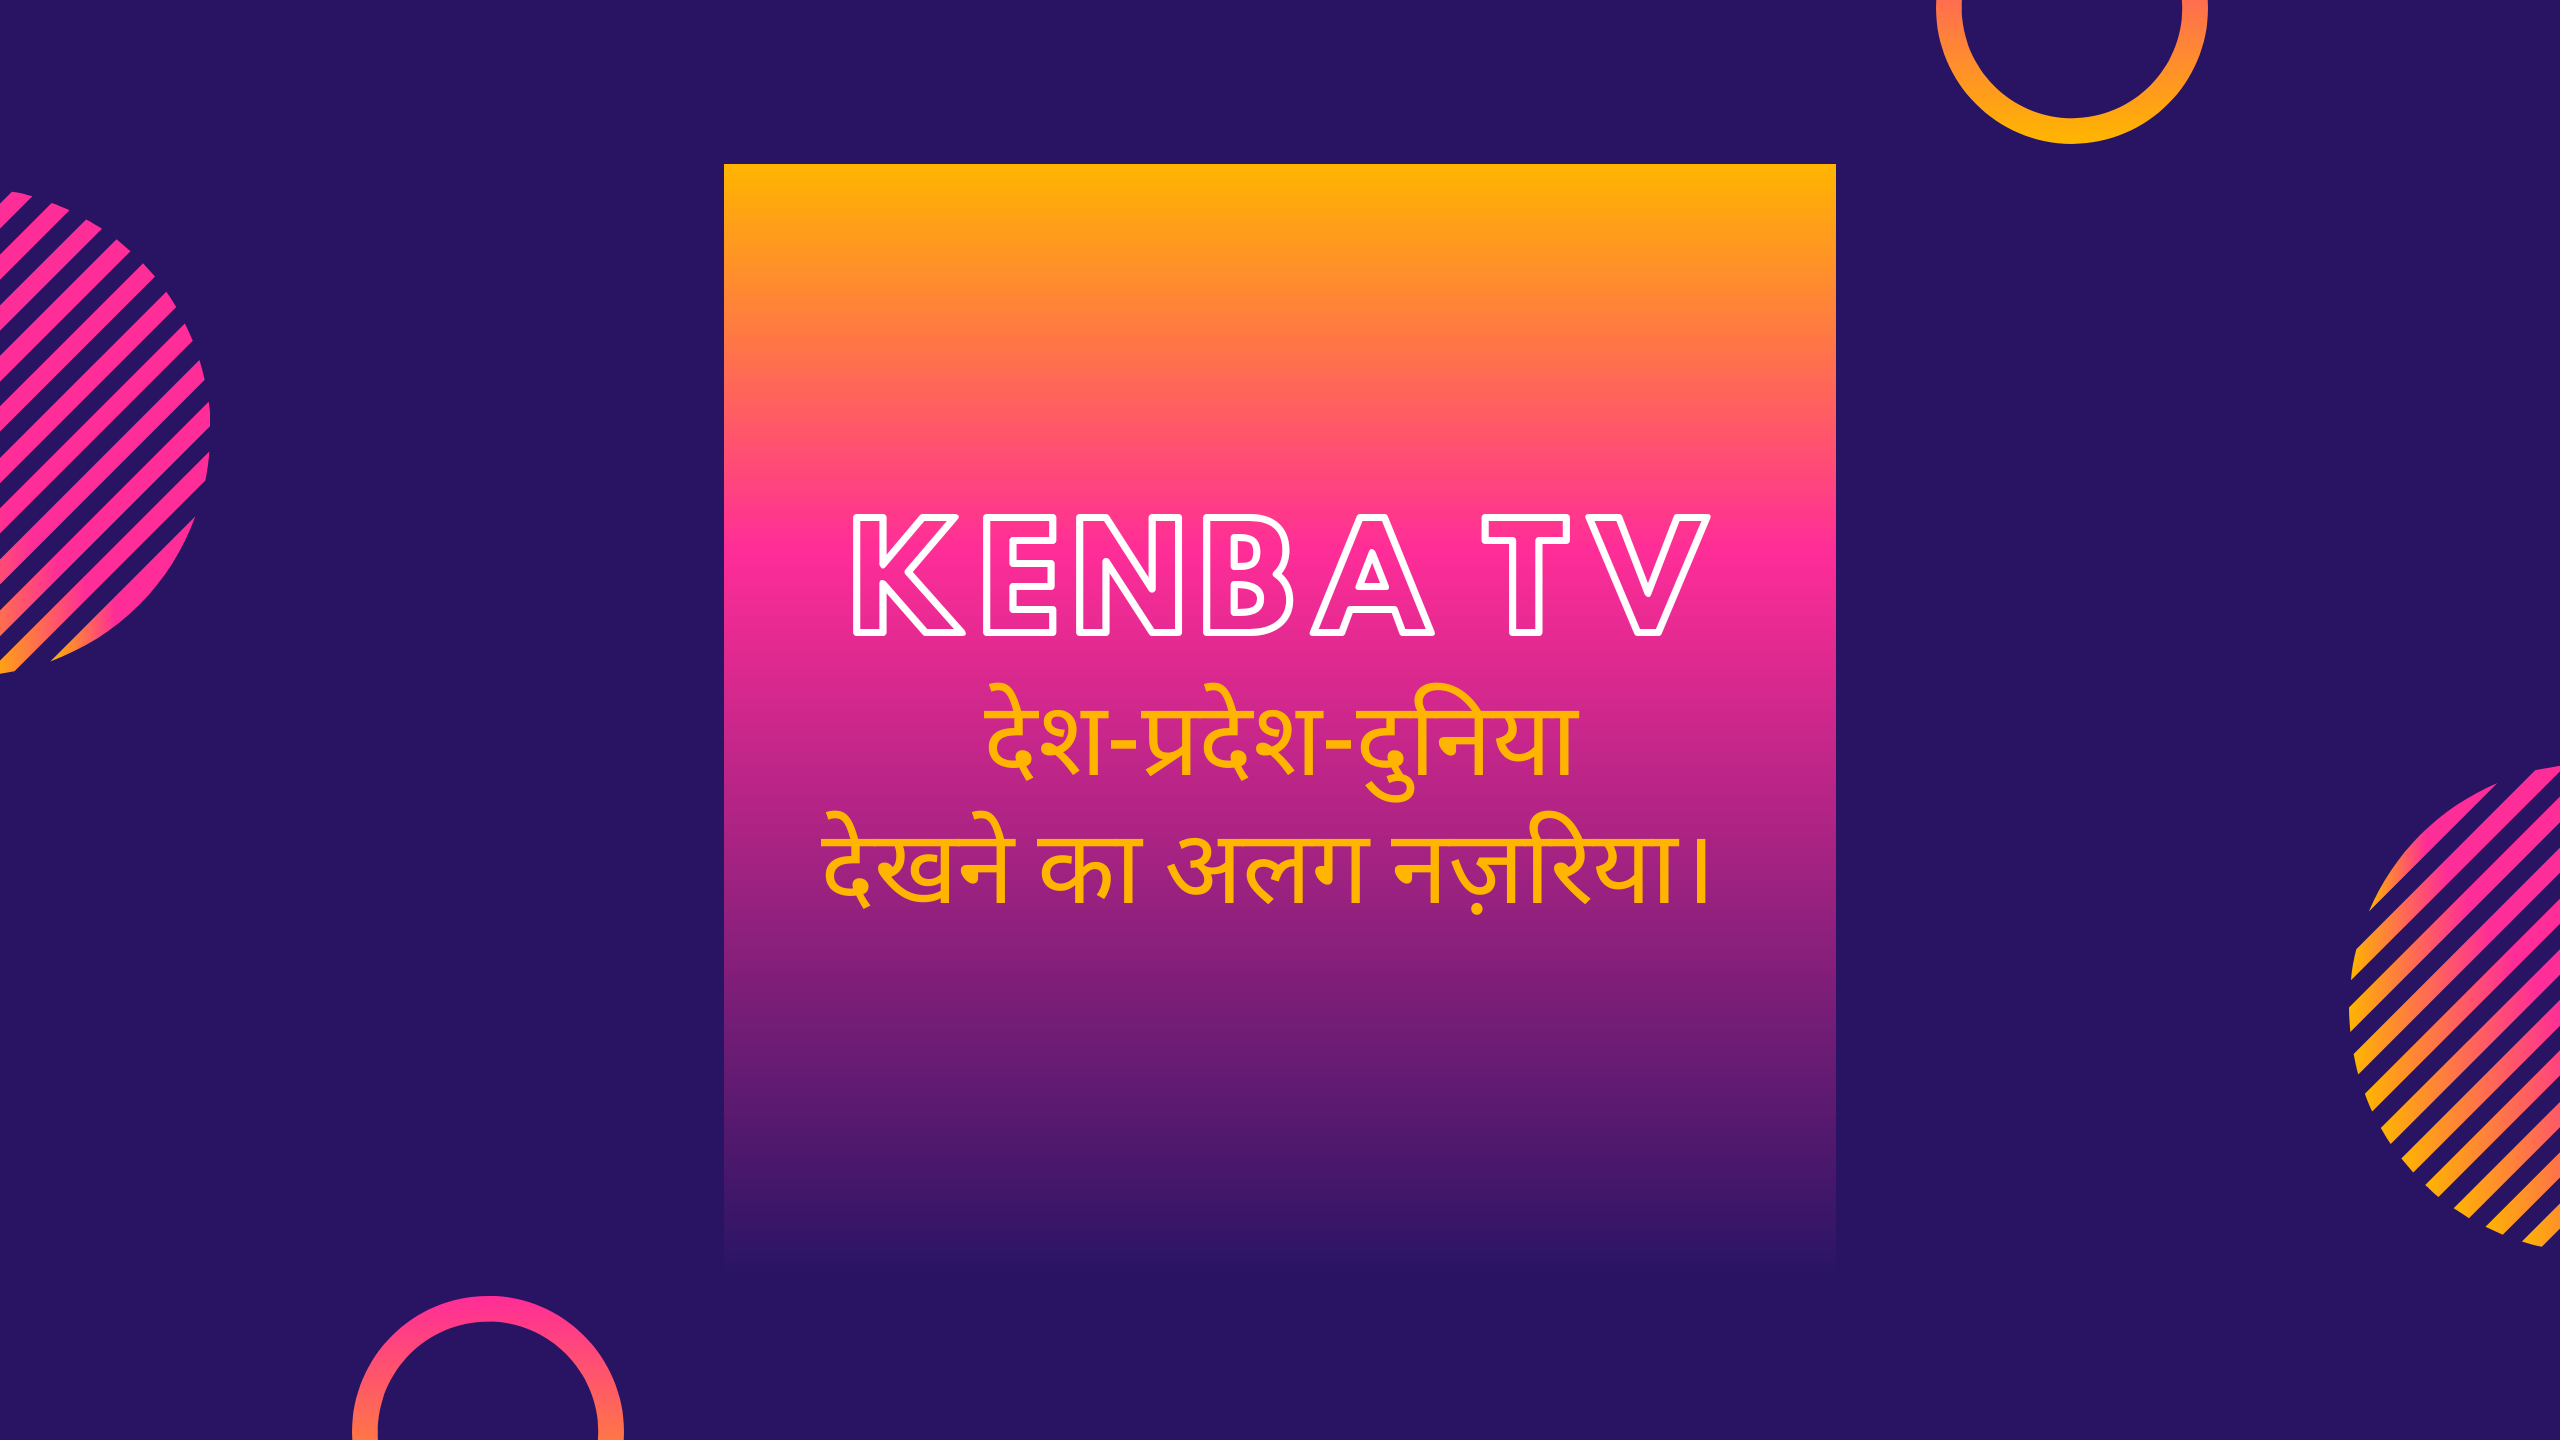 KENBA TV